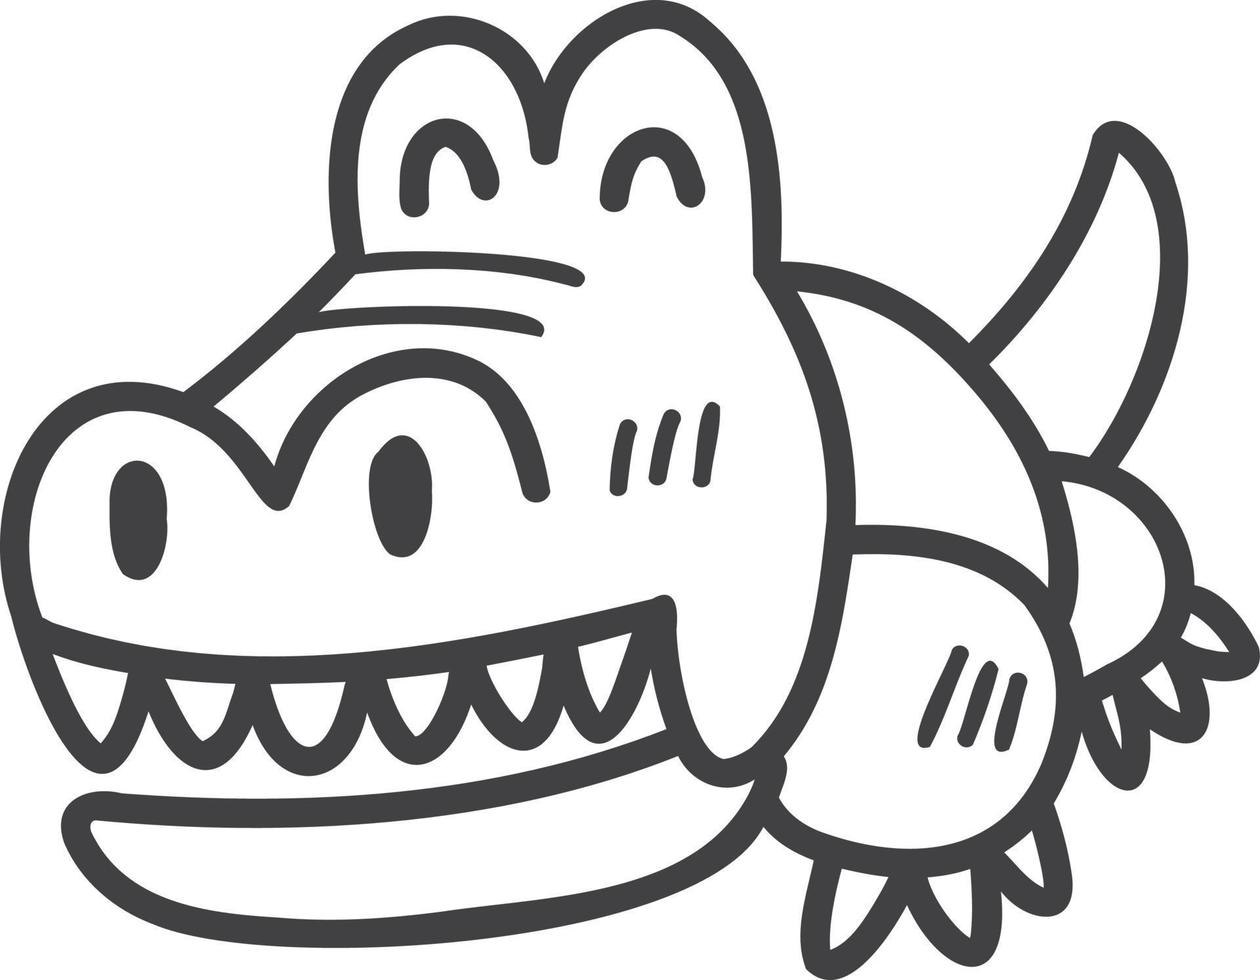 Hand Drawn crocodile toys for children illustration vector